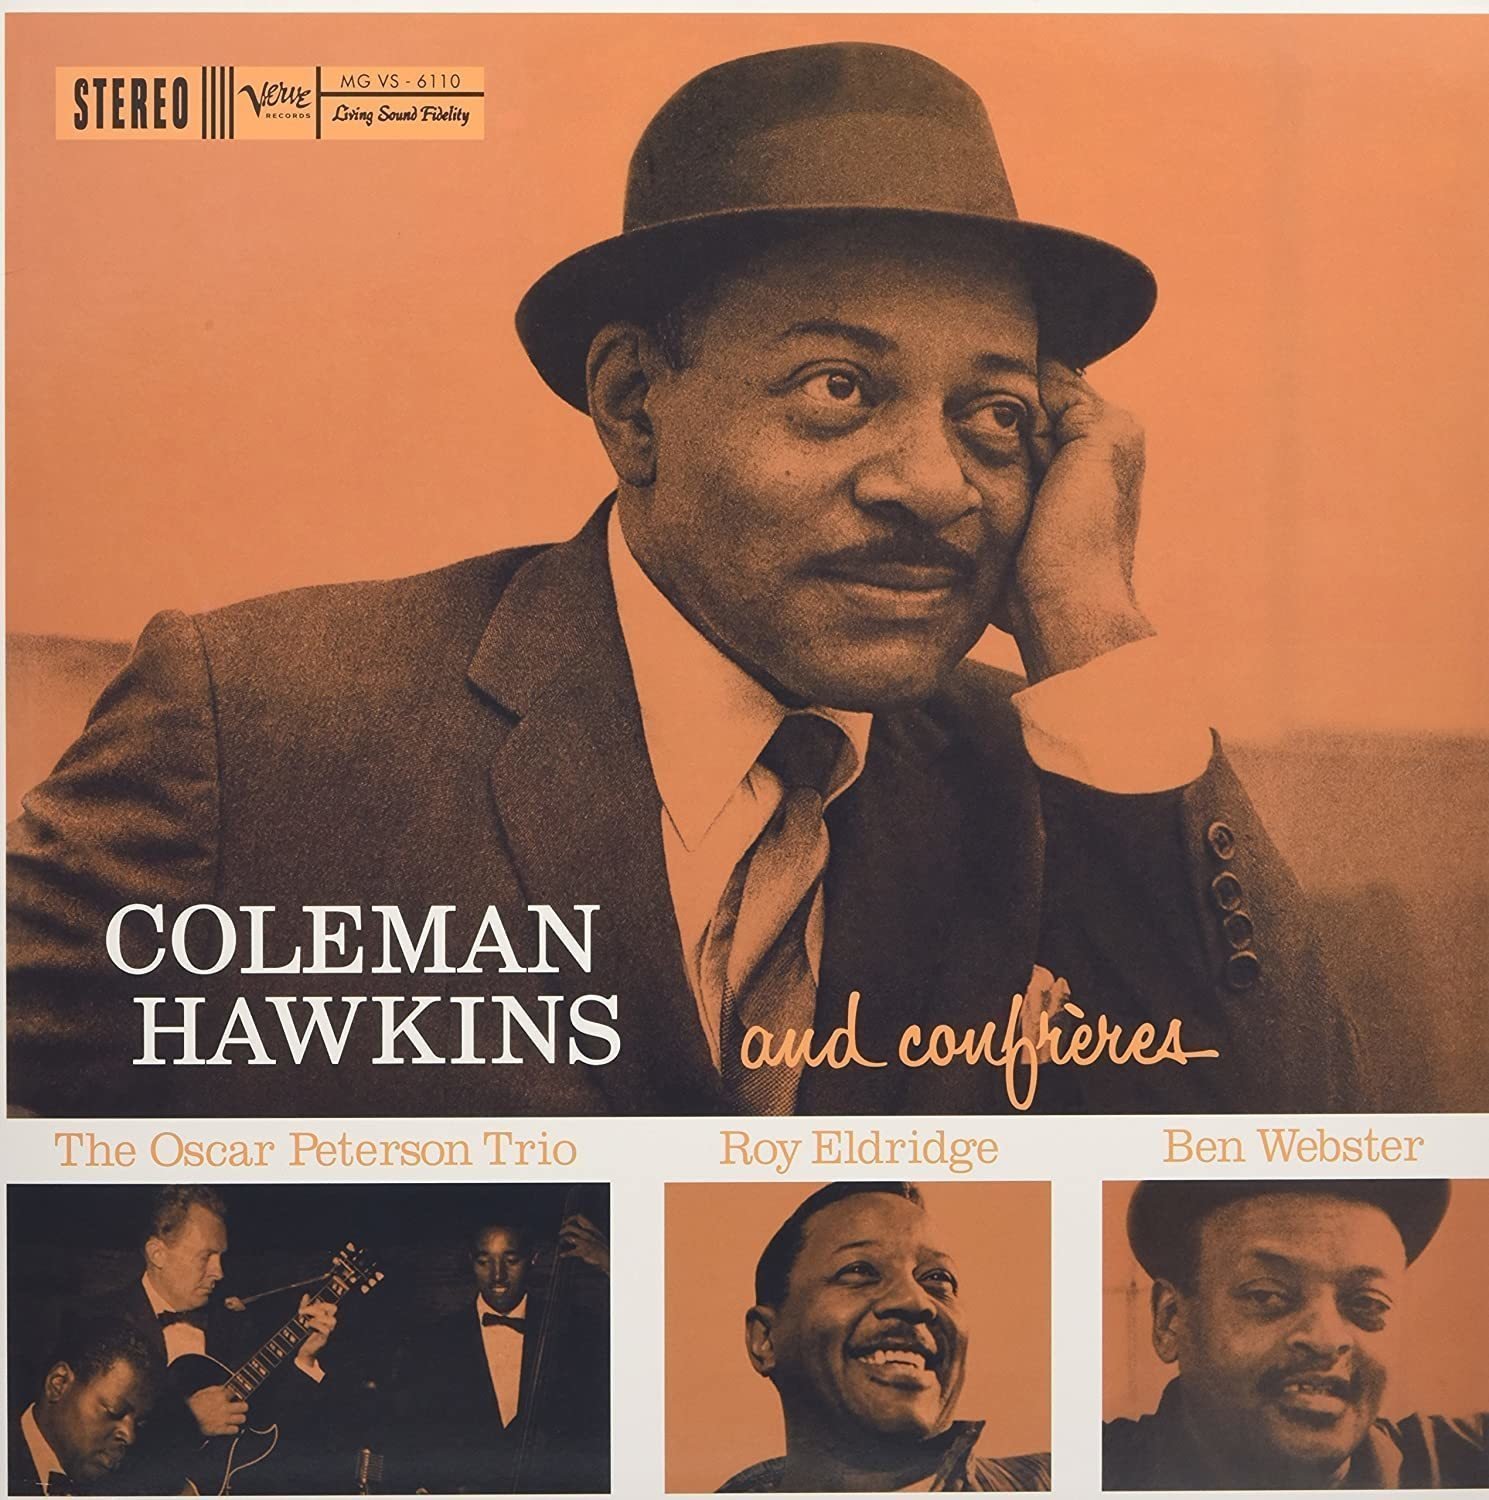 Vinylskiva Coleman Hawkins - Coleman Hawkins and Confreres (LP)